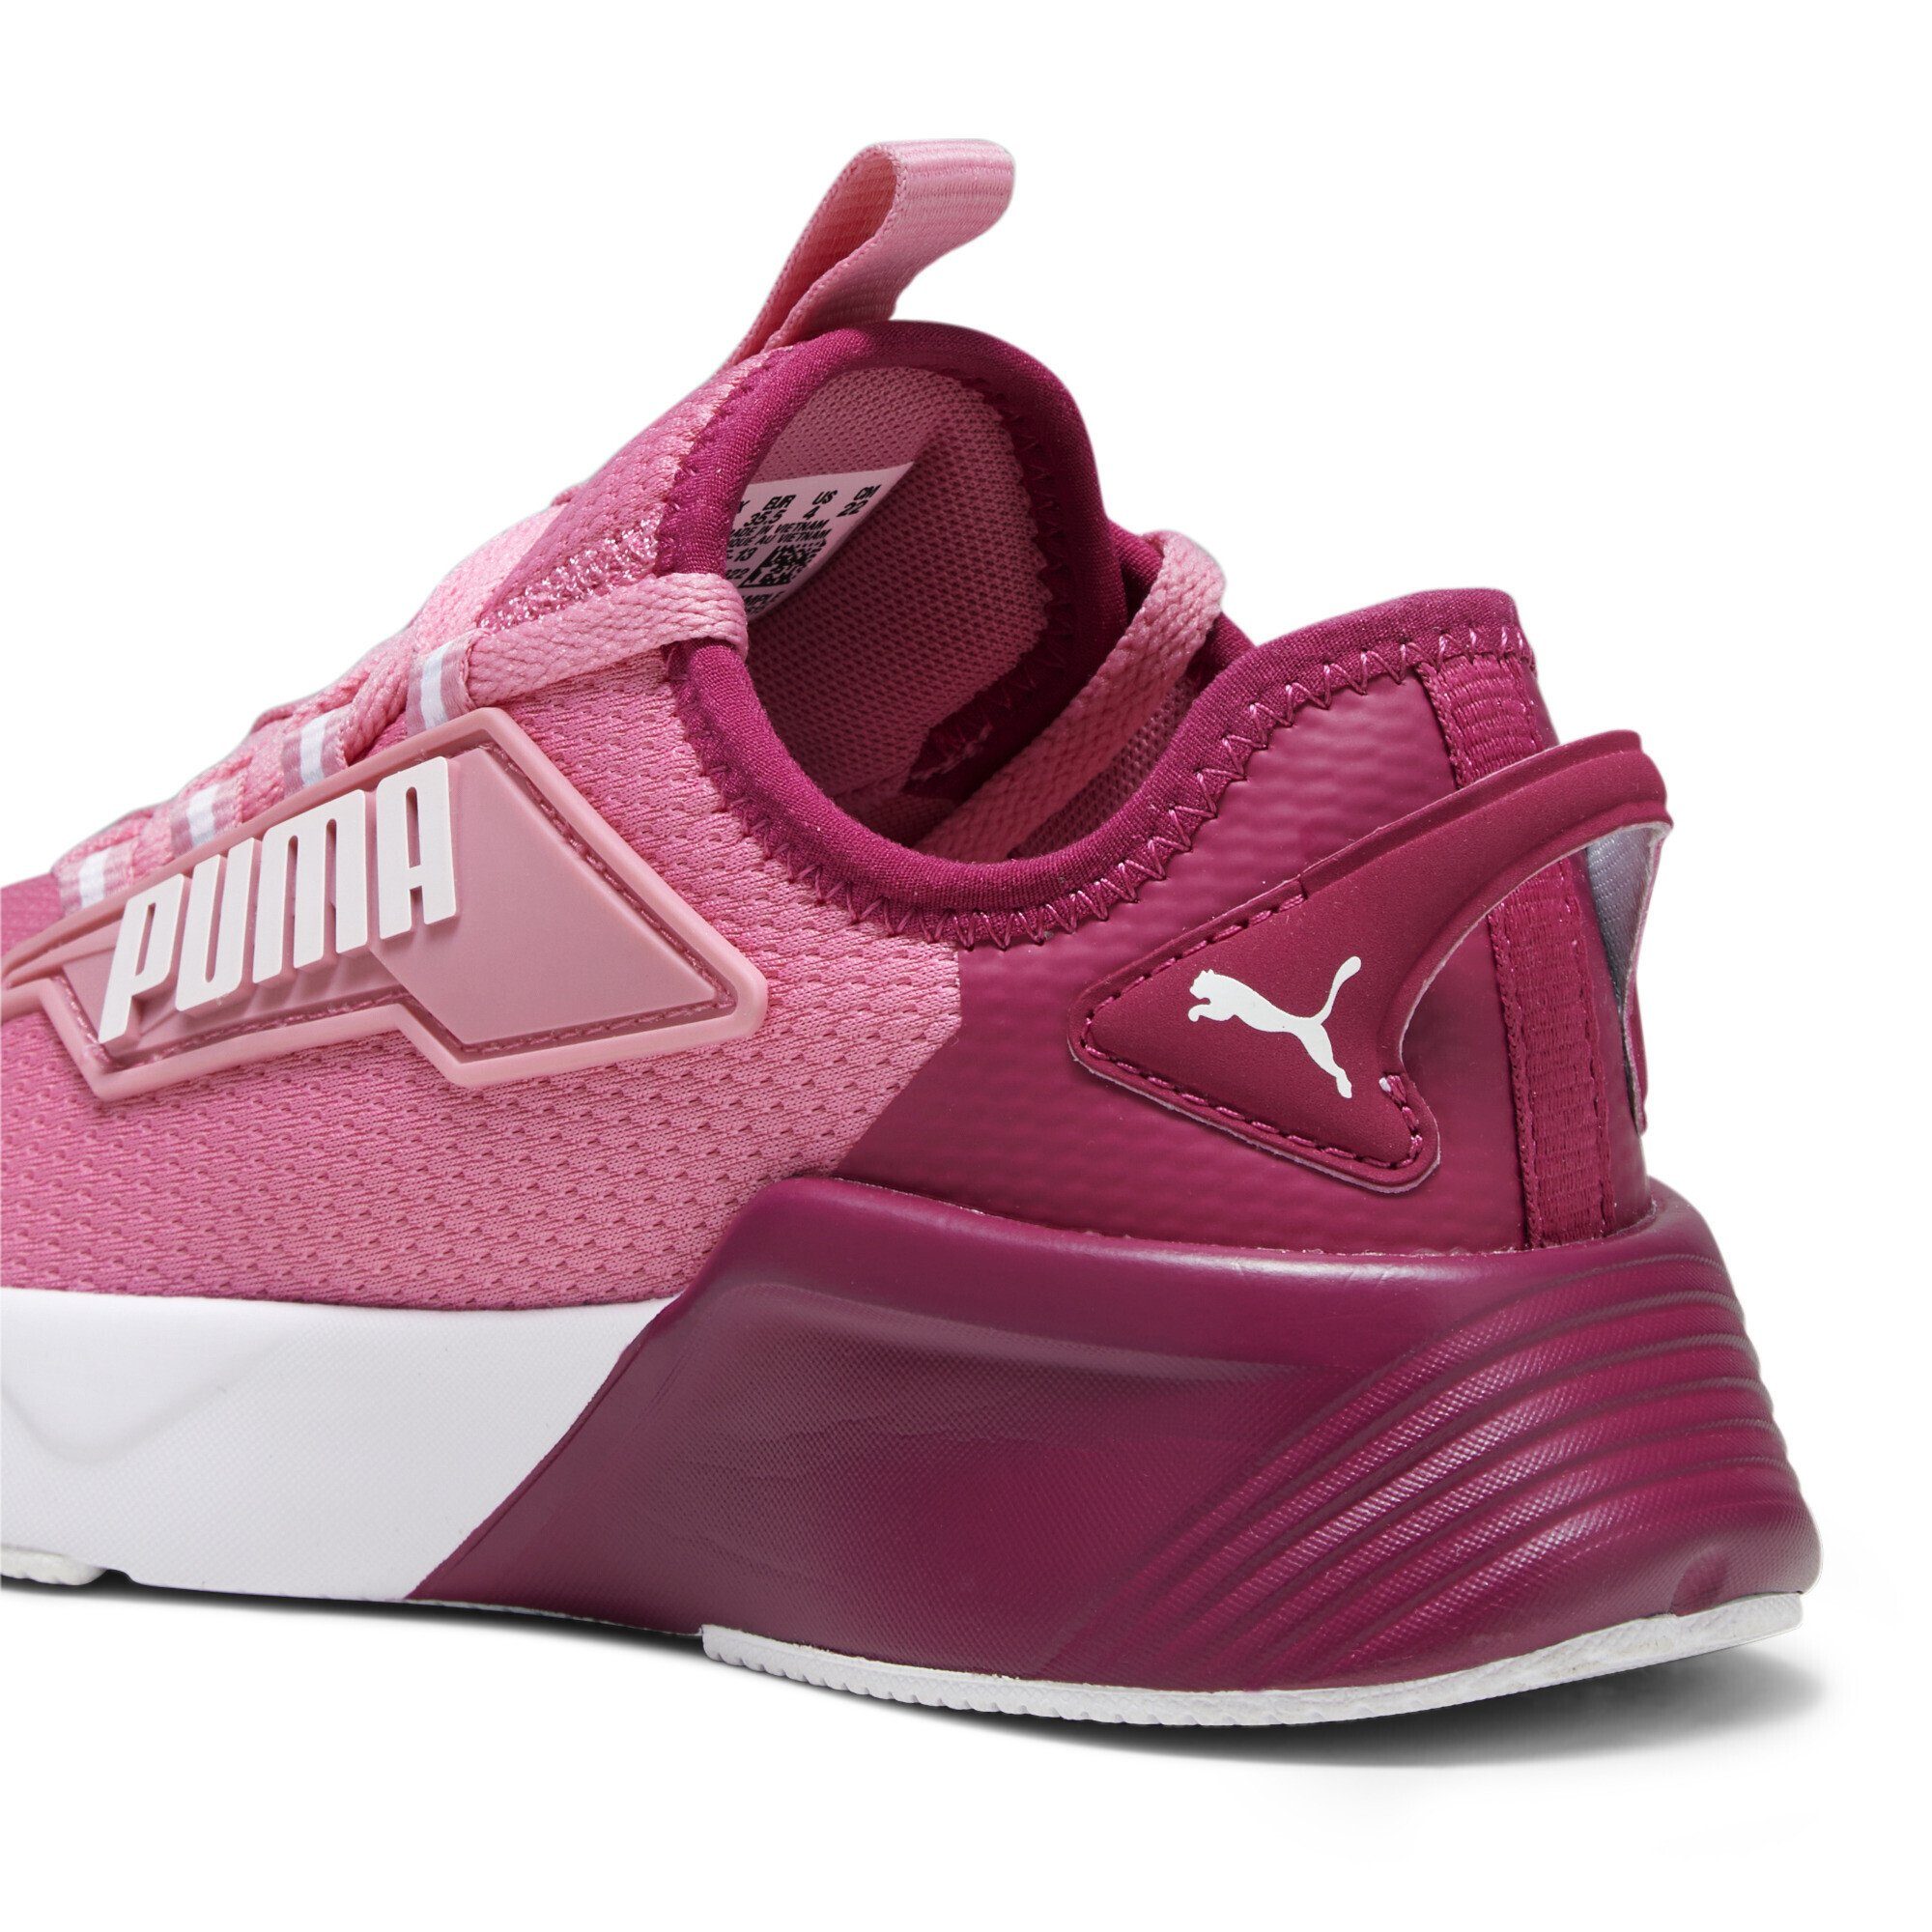 Sneakers Laufschuh Pink Pinktastic Retaliate Burst White Jugendliche PUMA 2 Strawberry